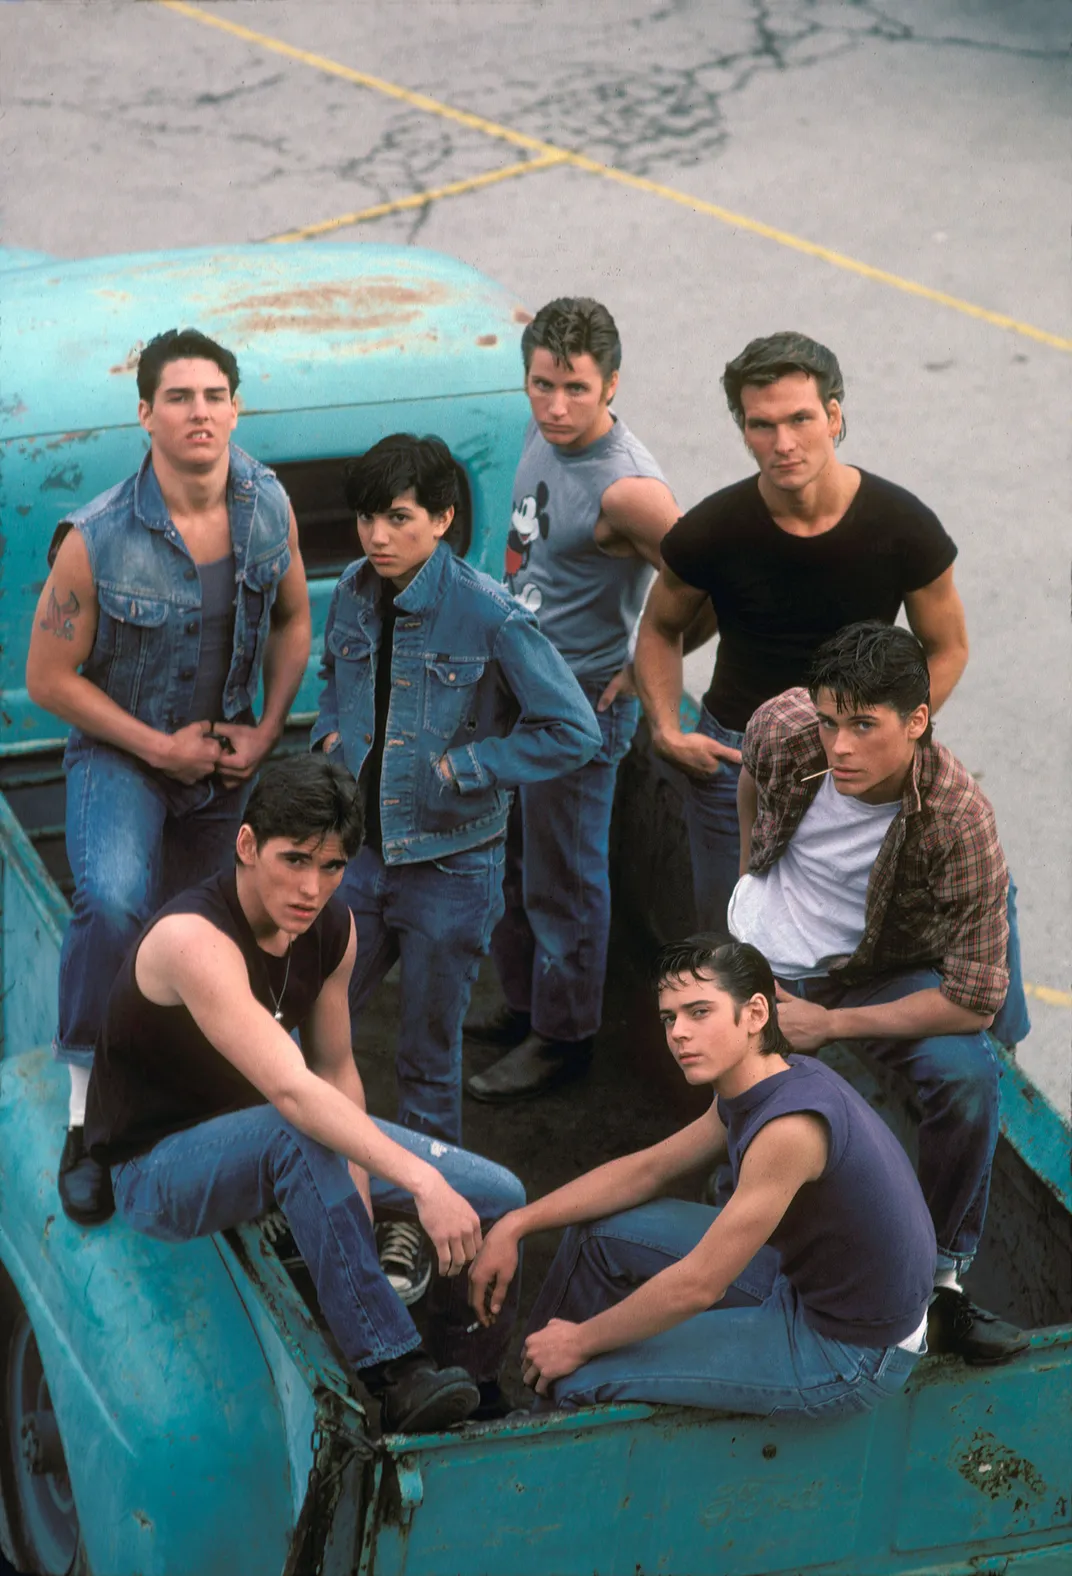 Clockwise from back left: Tom Cruise, Ralph Macchio, Emilio Estevez, Patrick Swayze, Rob Lowe, C. Thomas Howell and Matt Dillon